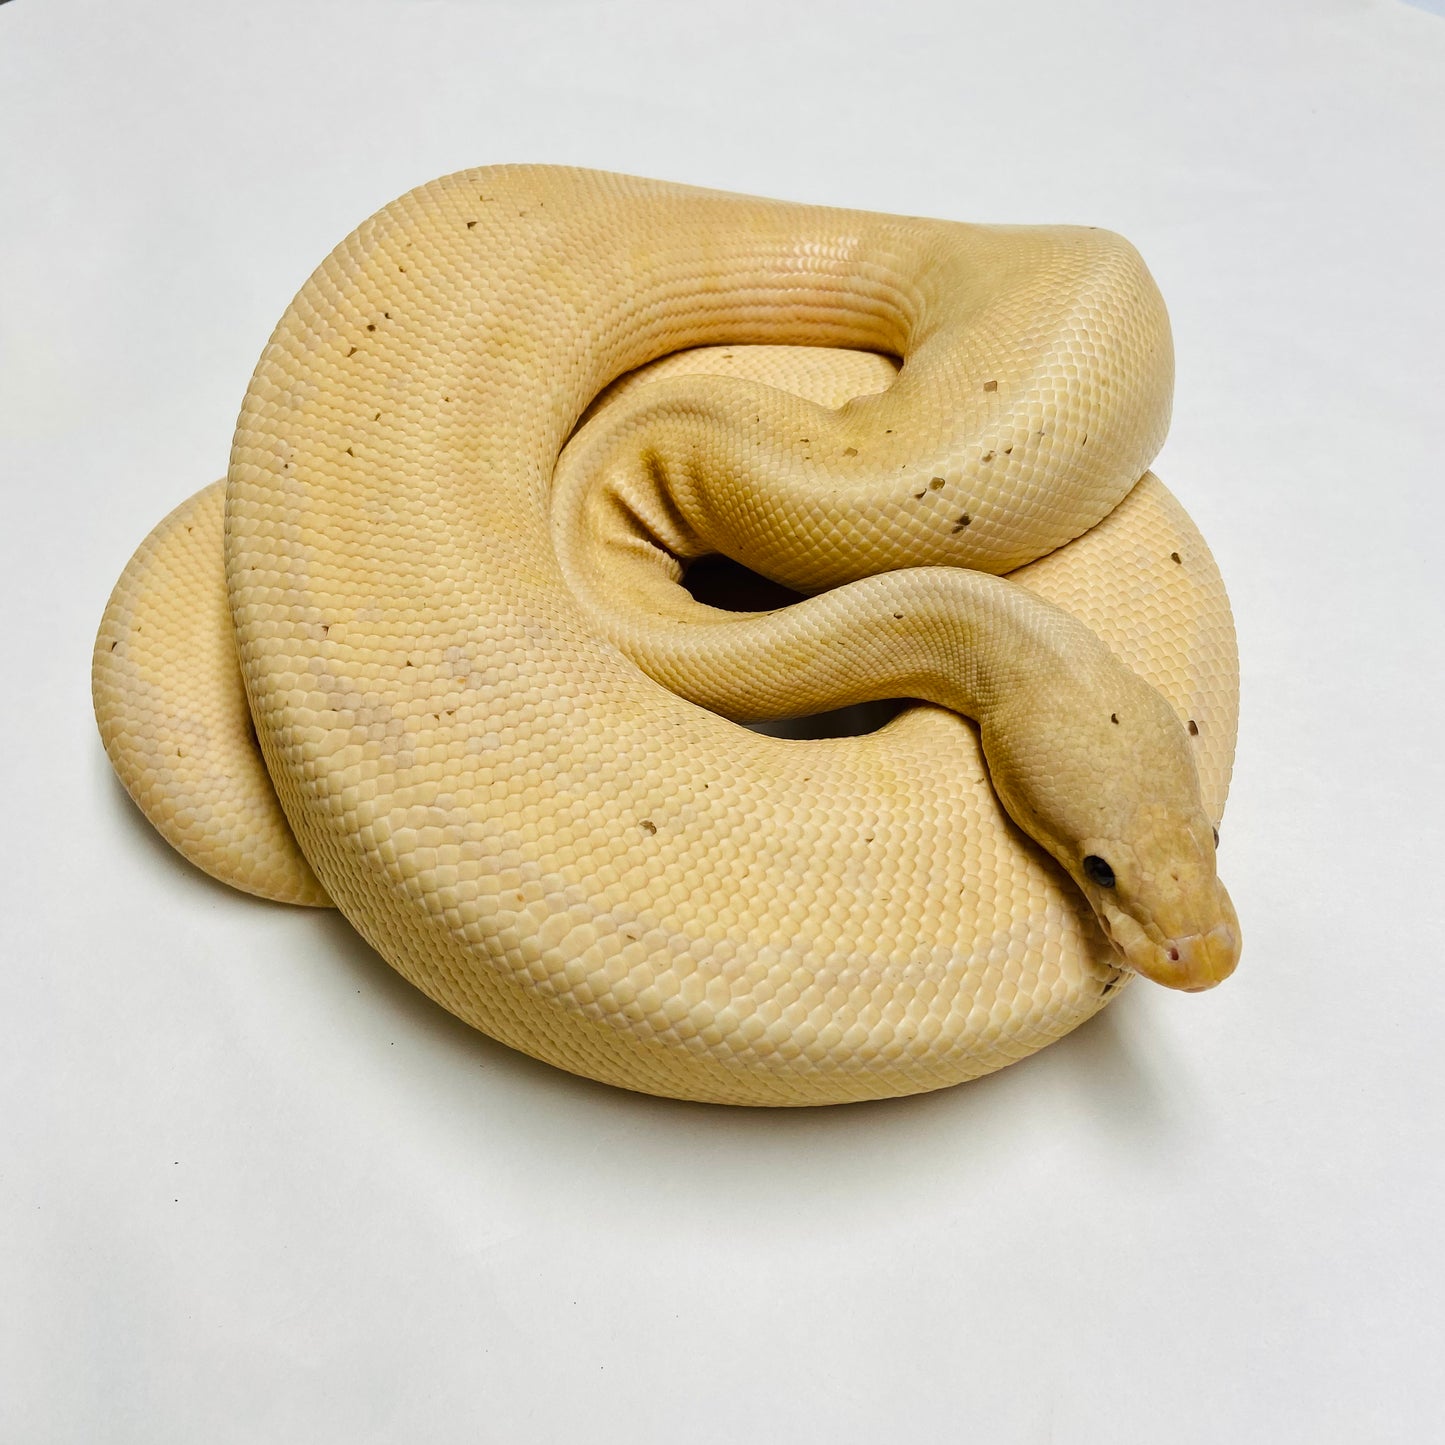 Adult Banana Lori X-treme Pinstripe Ball Python- Male